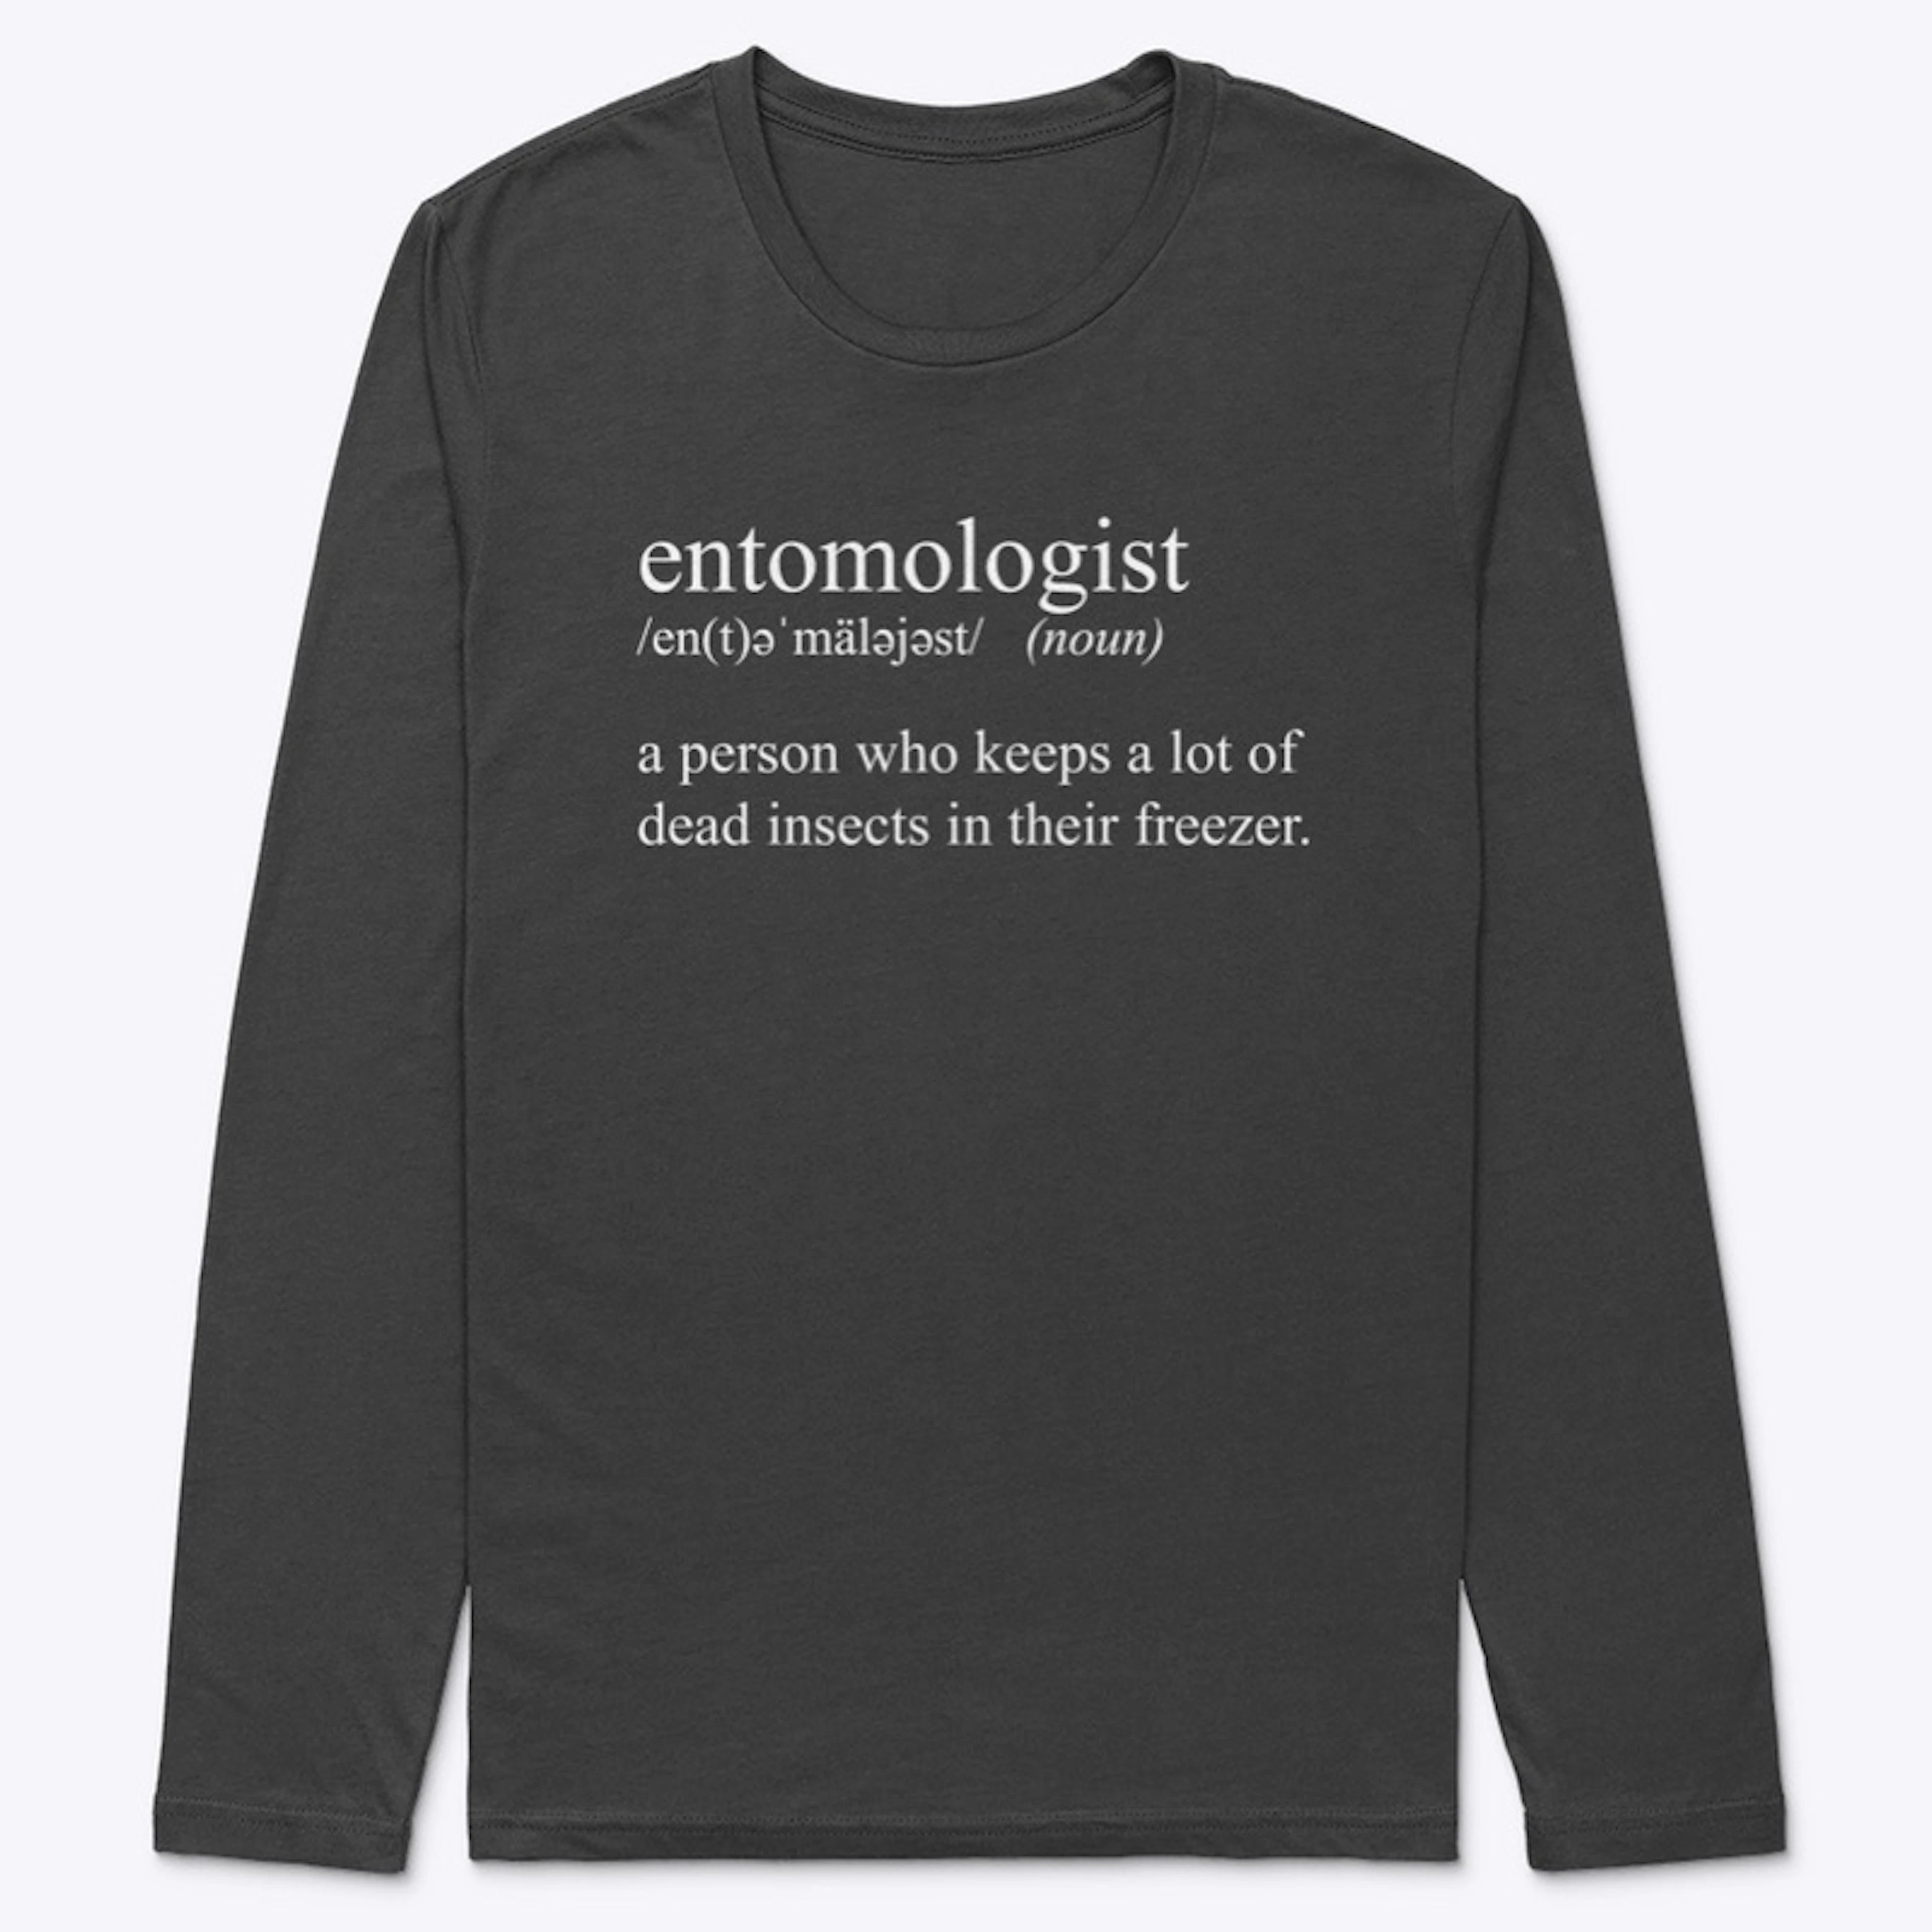 Definition of an Entomologist